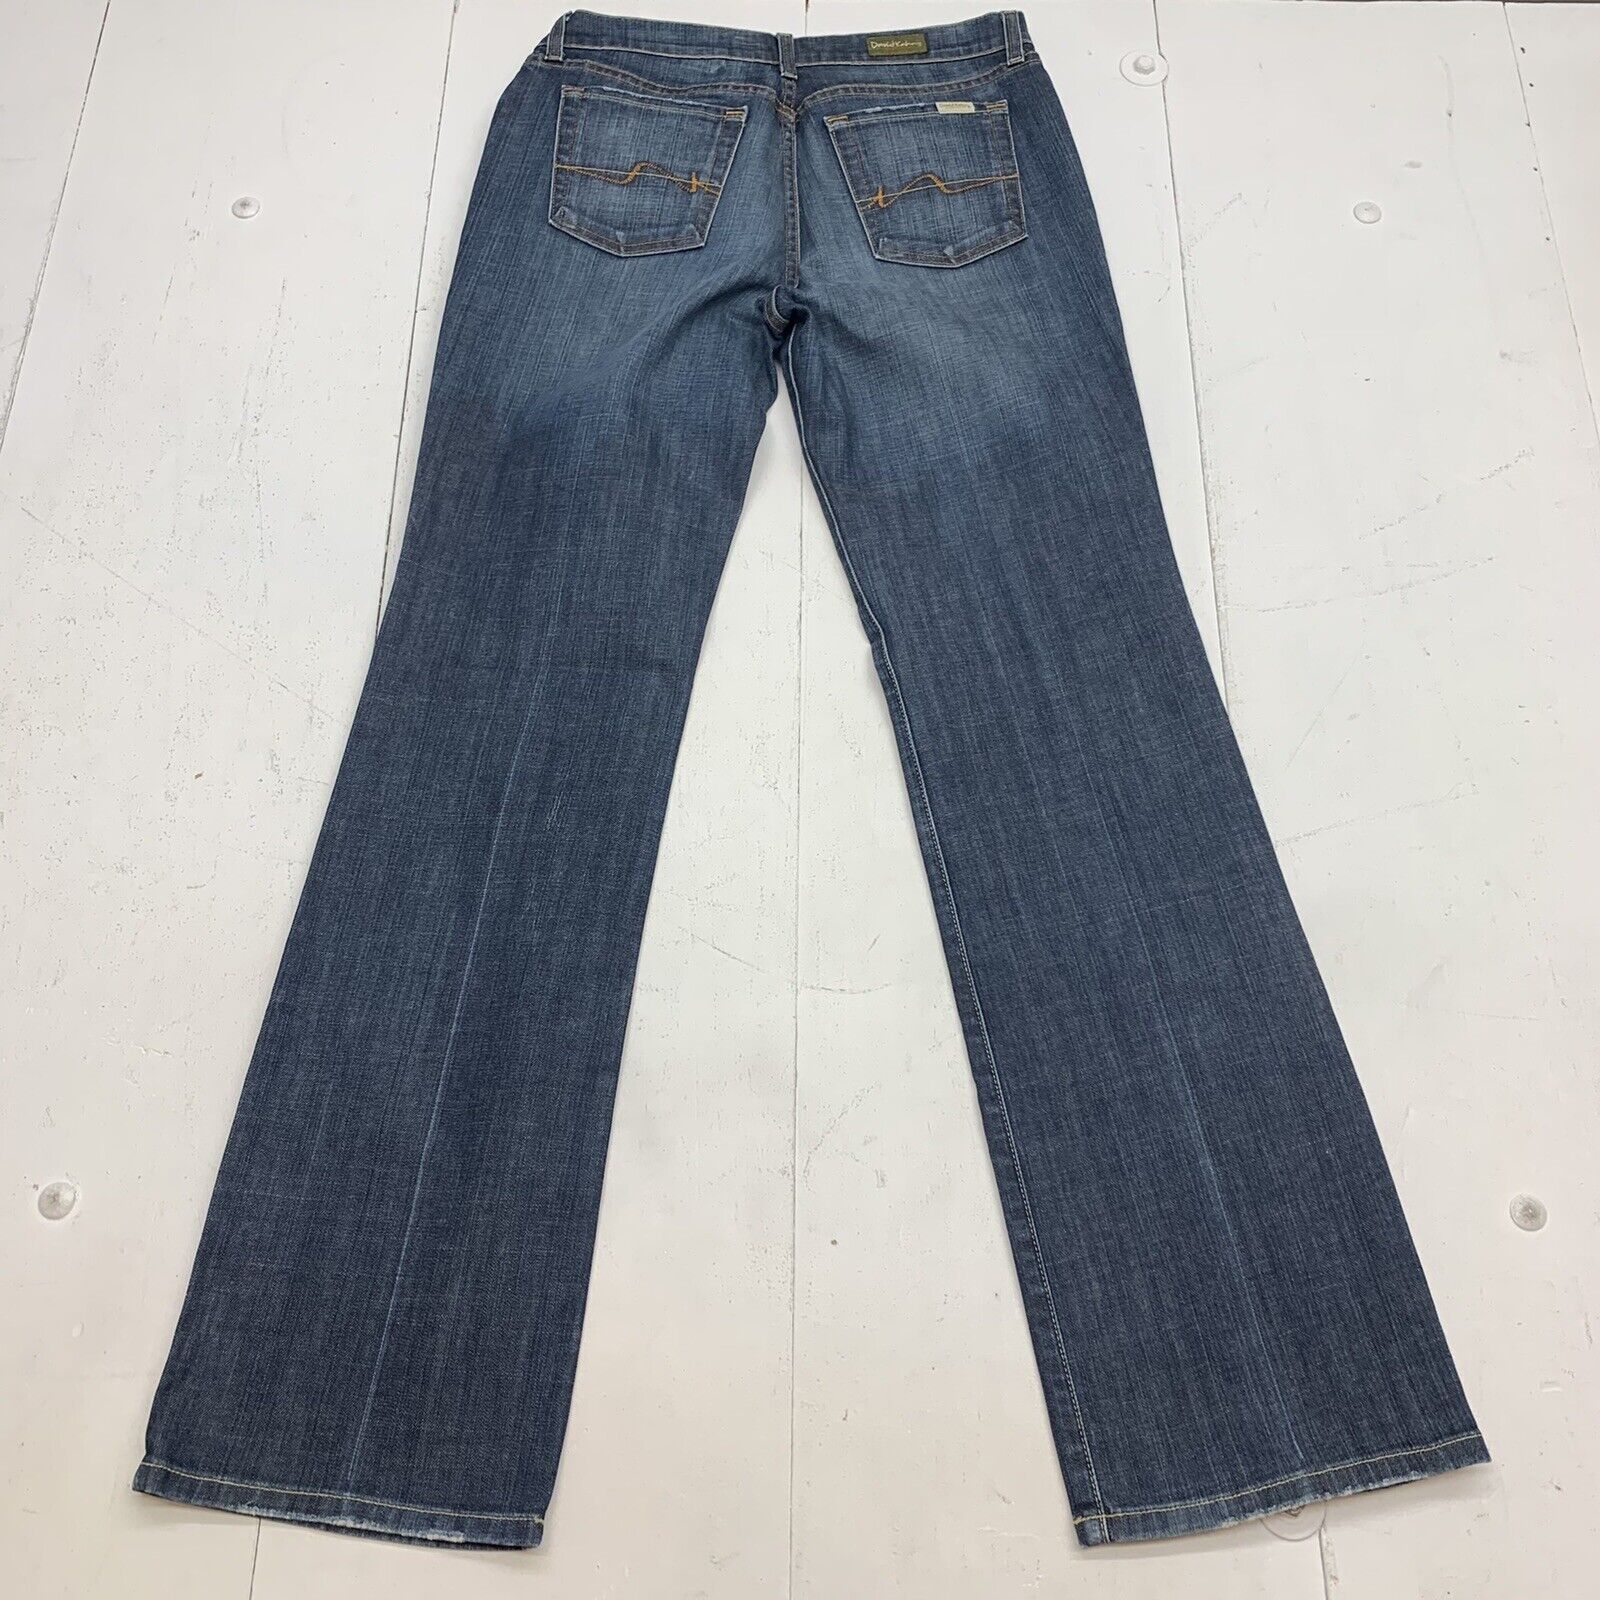 David Kahn Womens Blue Denim Jeans Size 10 - beyond exchange